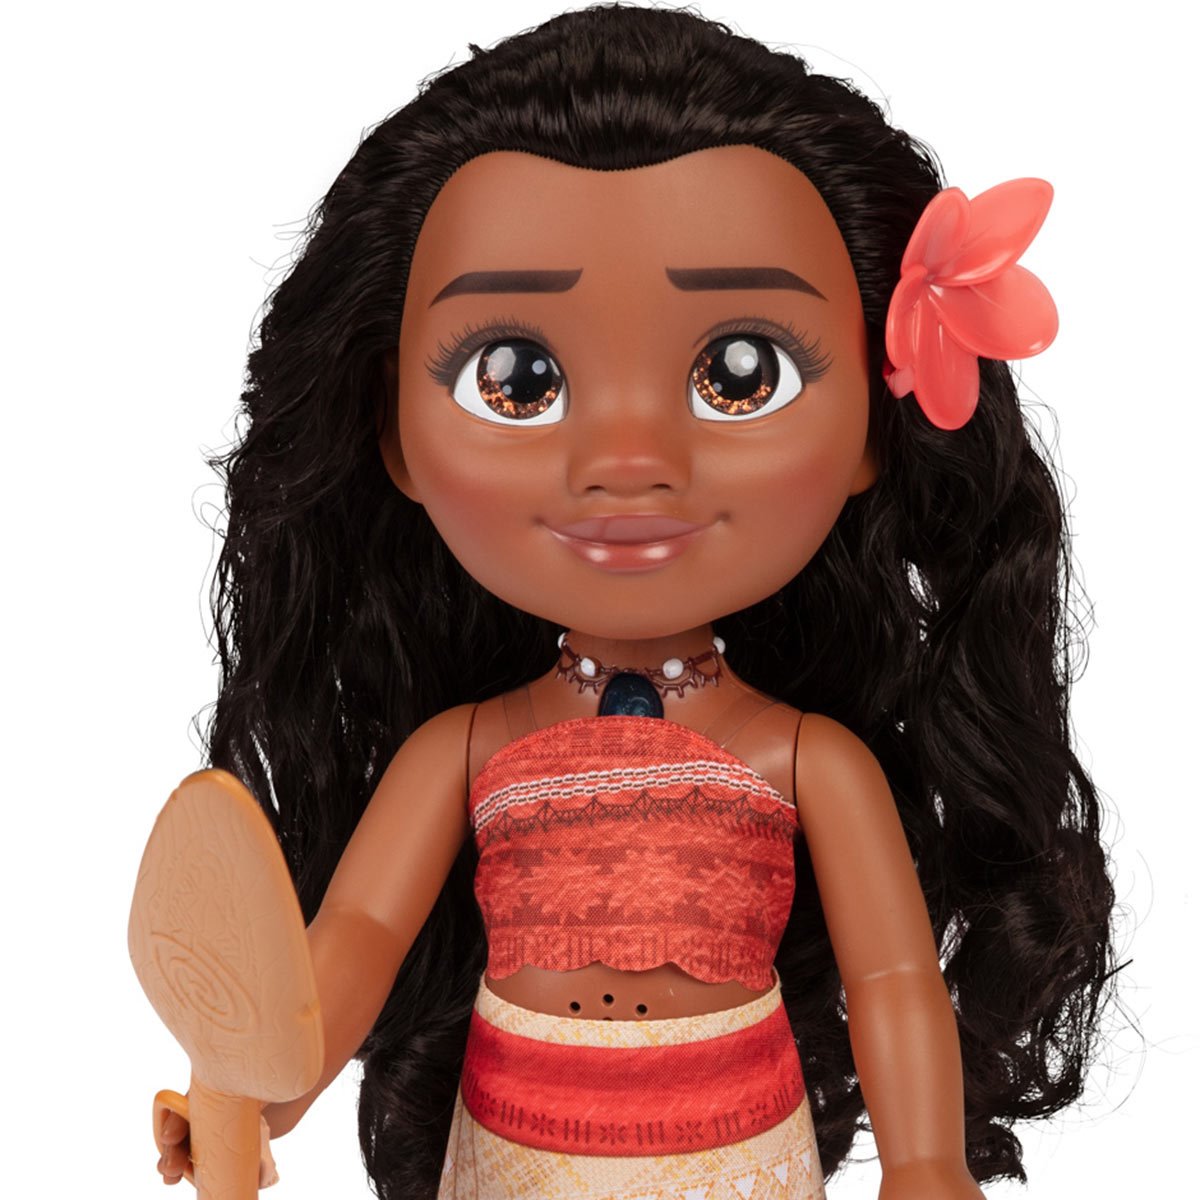 Disney Princess Singing Moana Doll - Dolls & Accessories